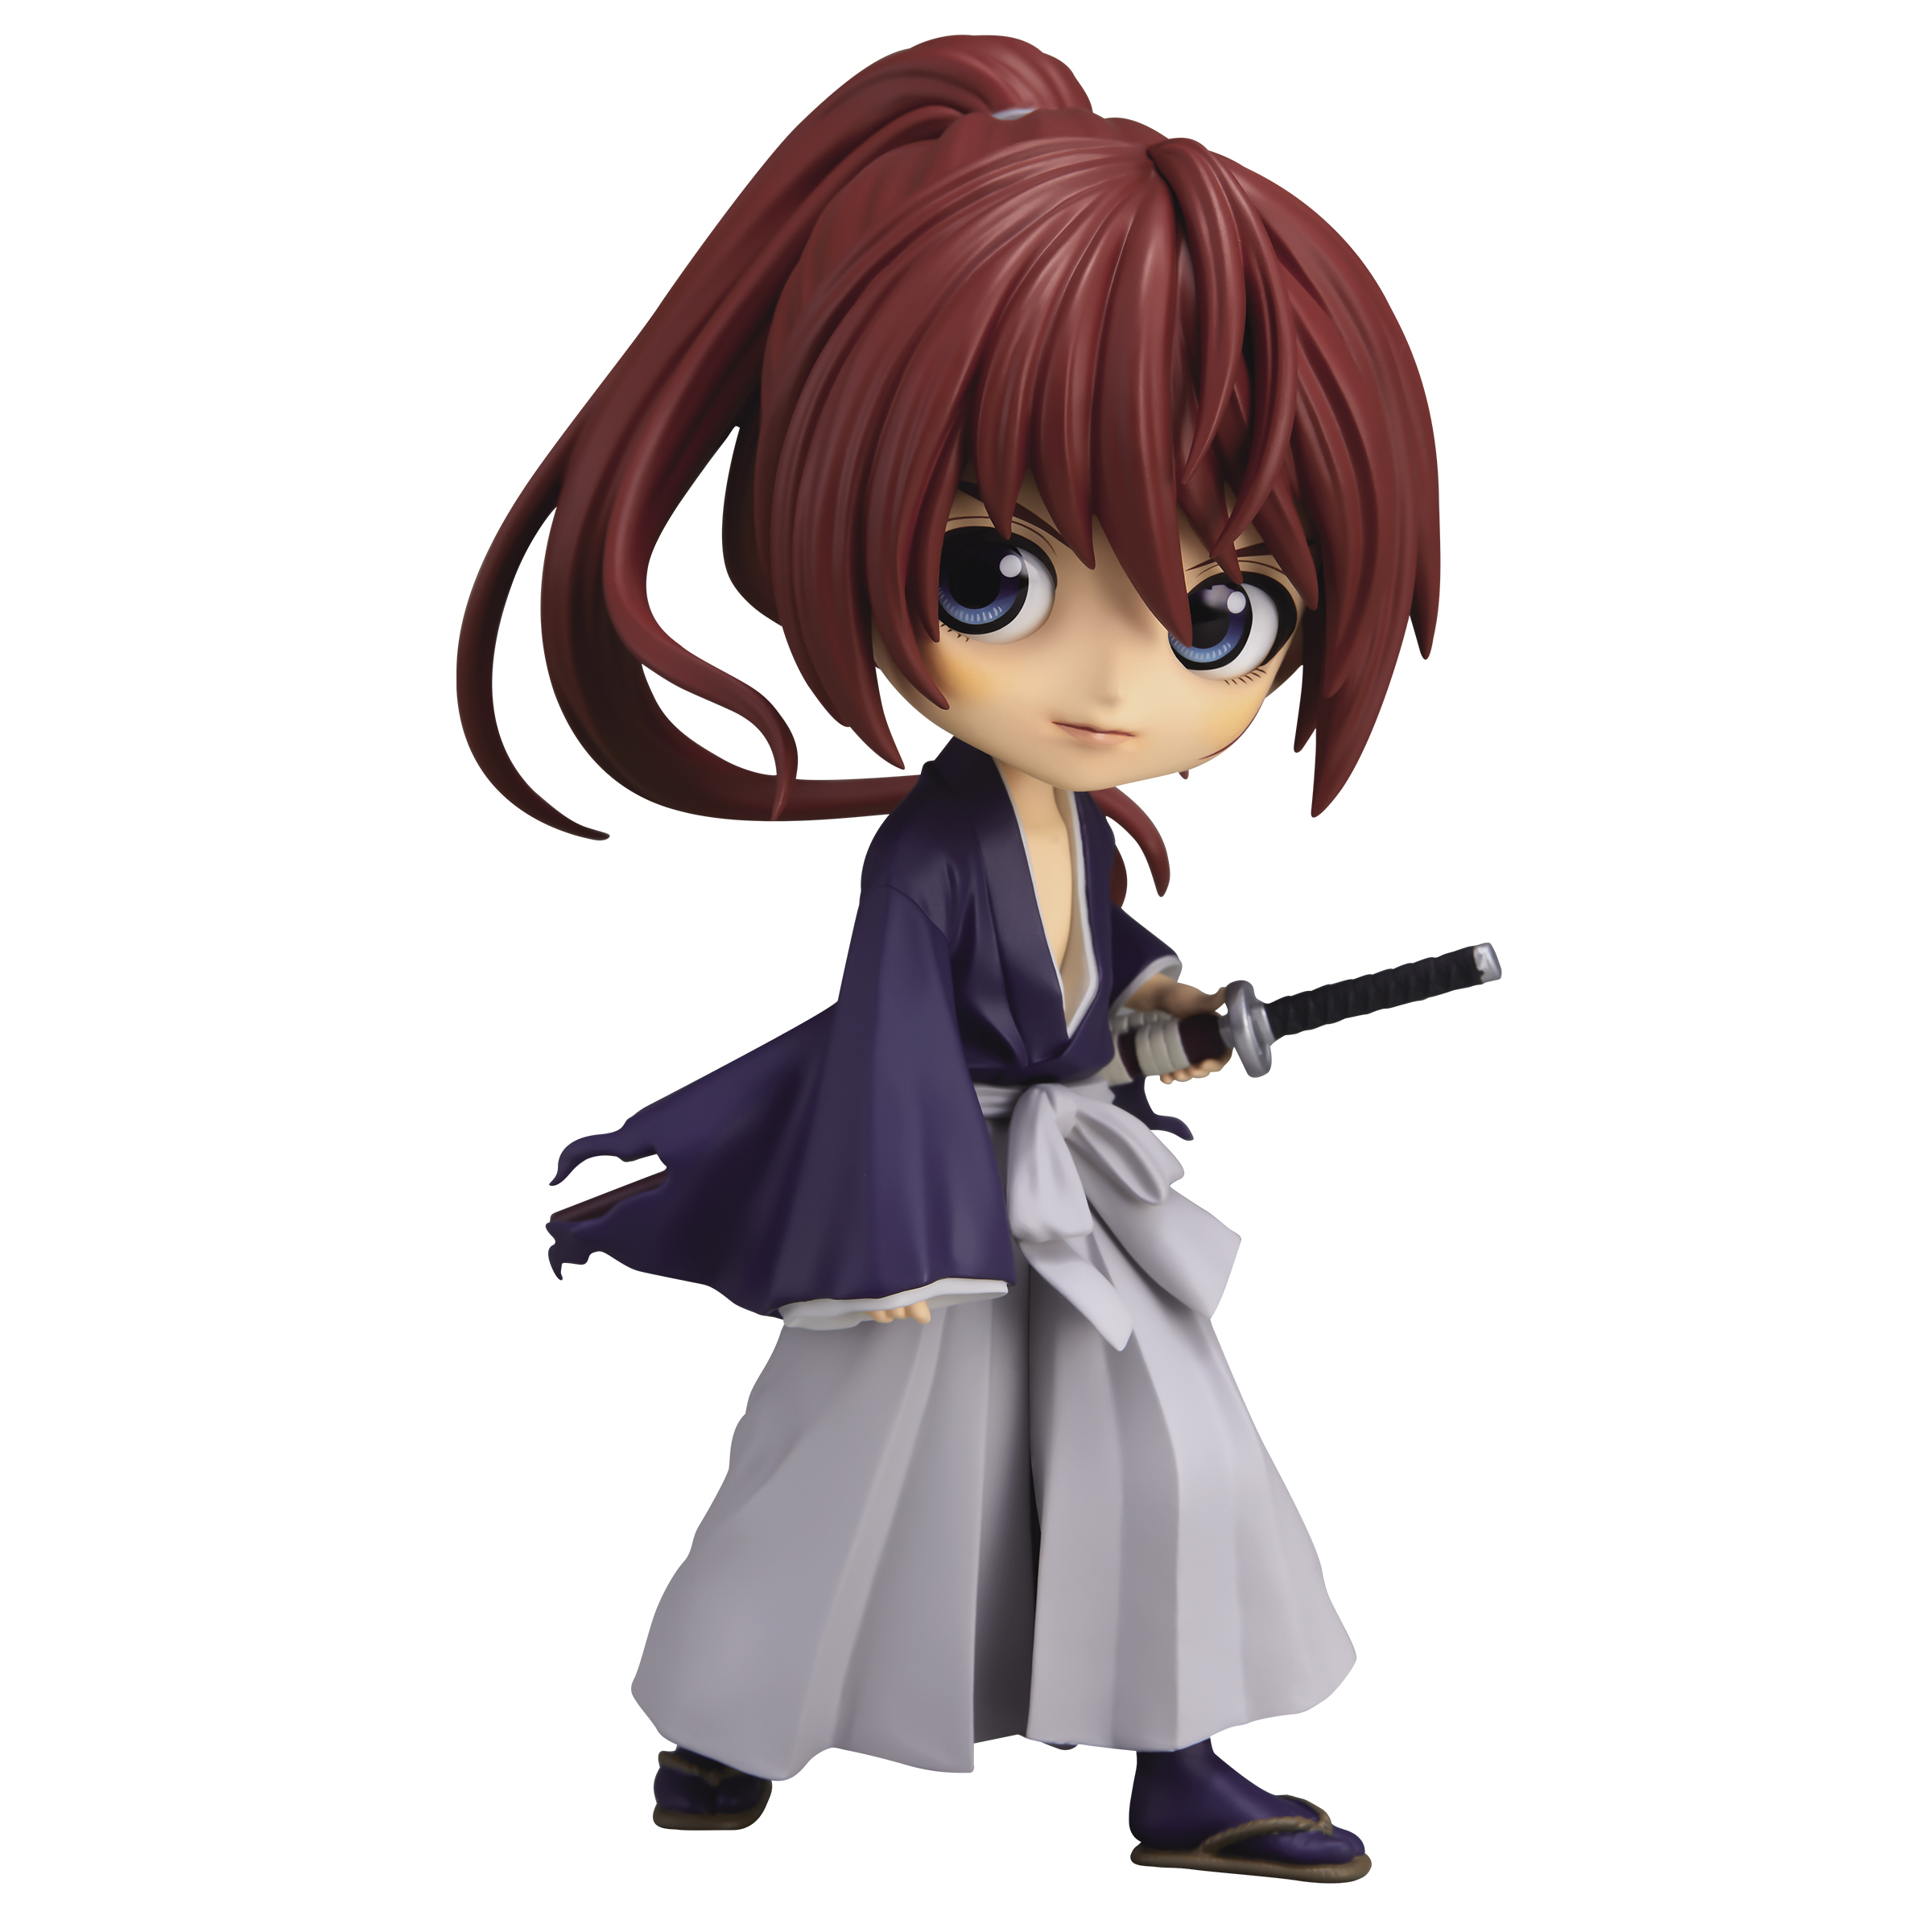 Rurouni Kenshin: Meiji Swordsman Romantic Story.  wiki/Rurouni_Kenshin